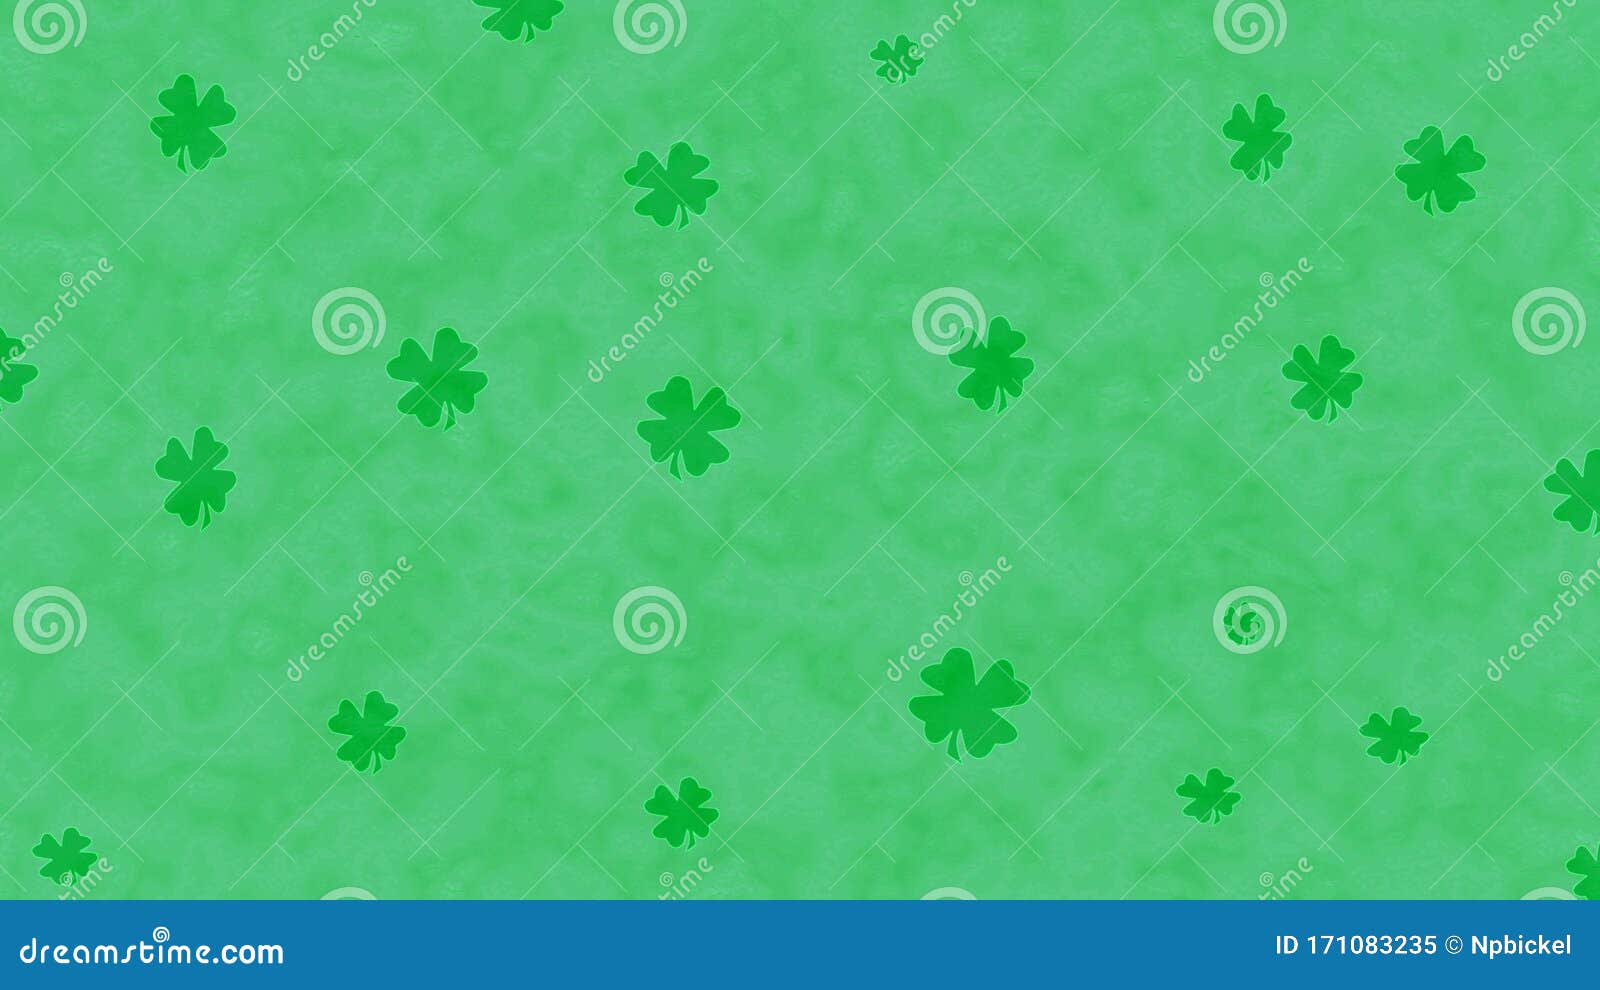 St Patricks Day Images  Free Download on Freepik